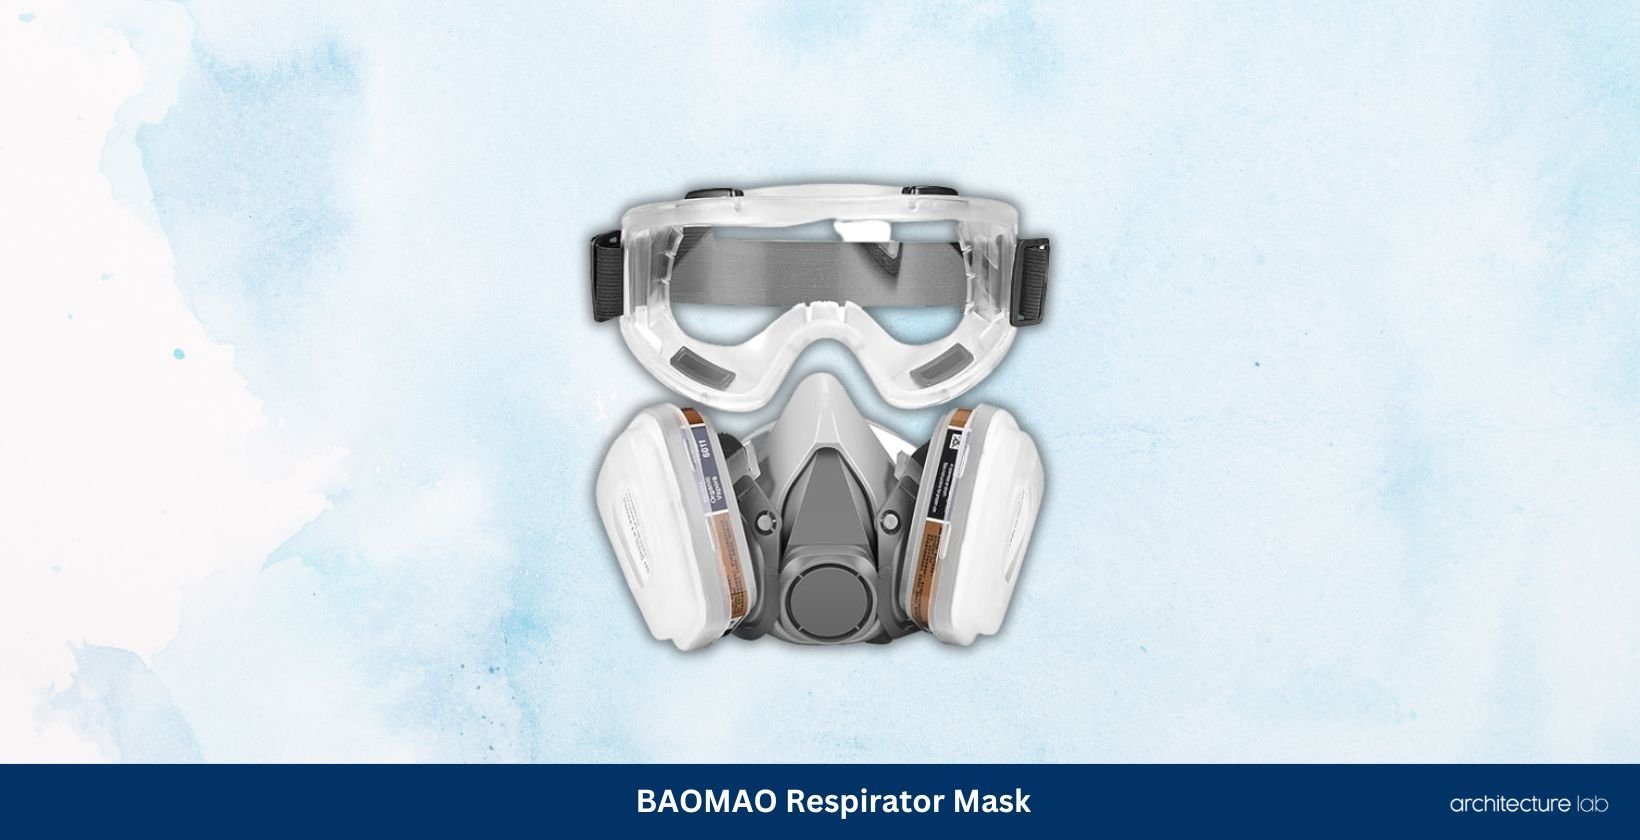 Baomao respirator mask